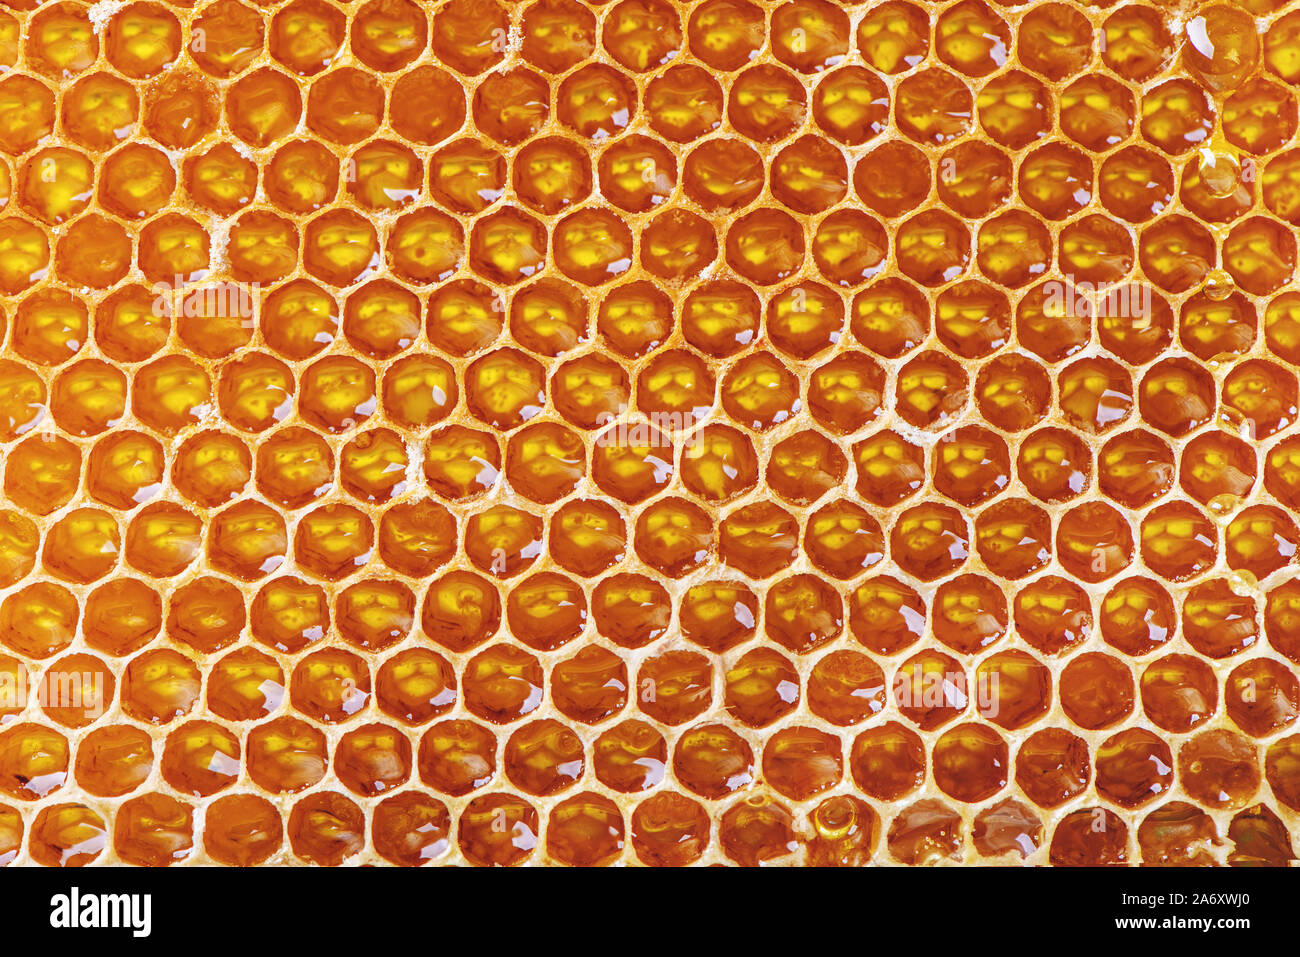 Close up image of fresh honeycomb. Natural background. Stock Photo